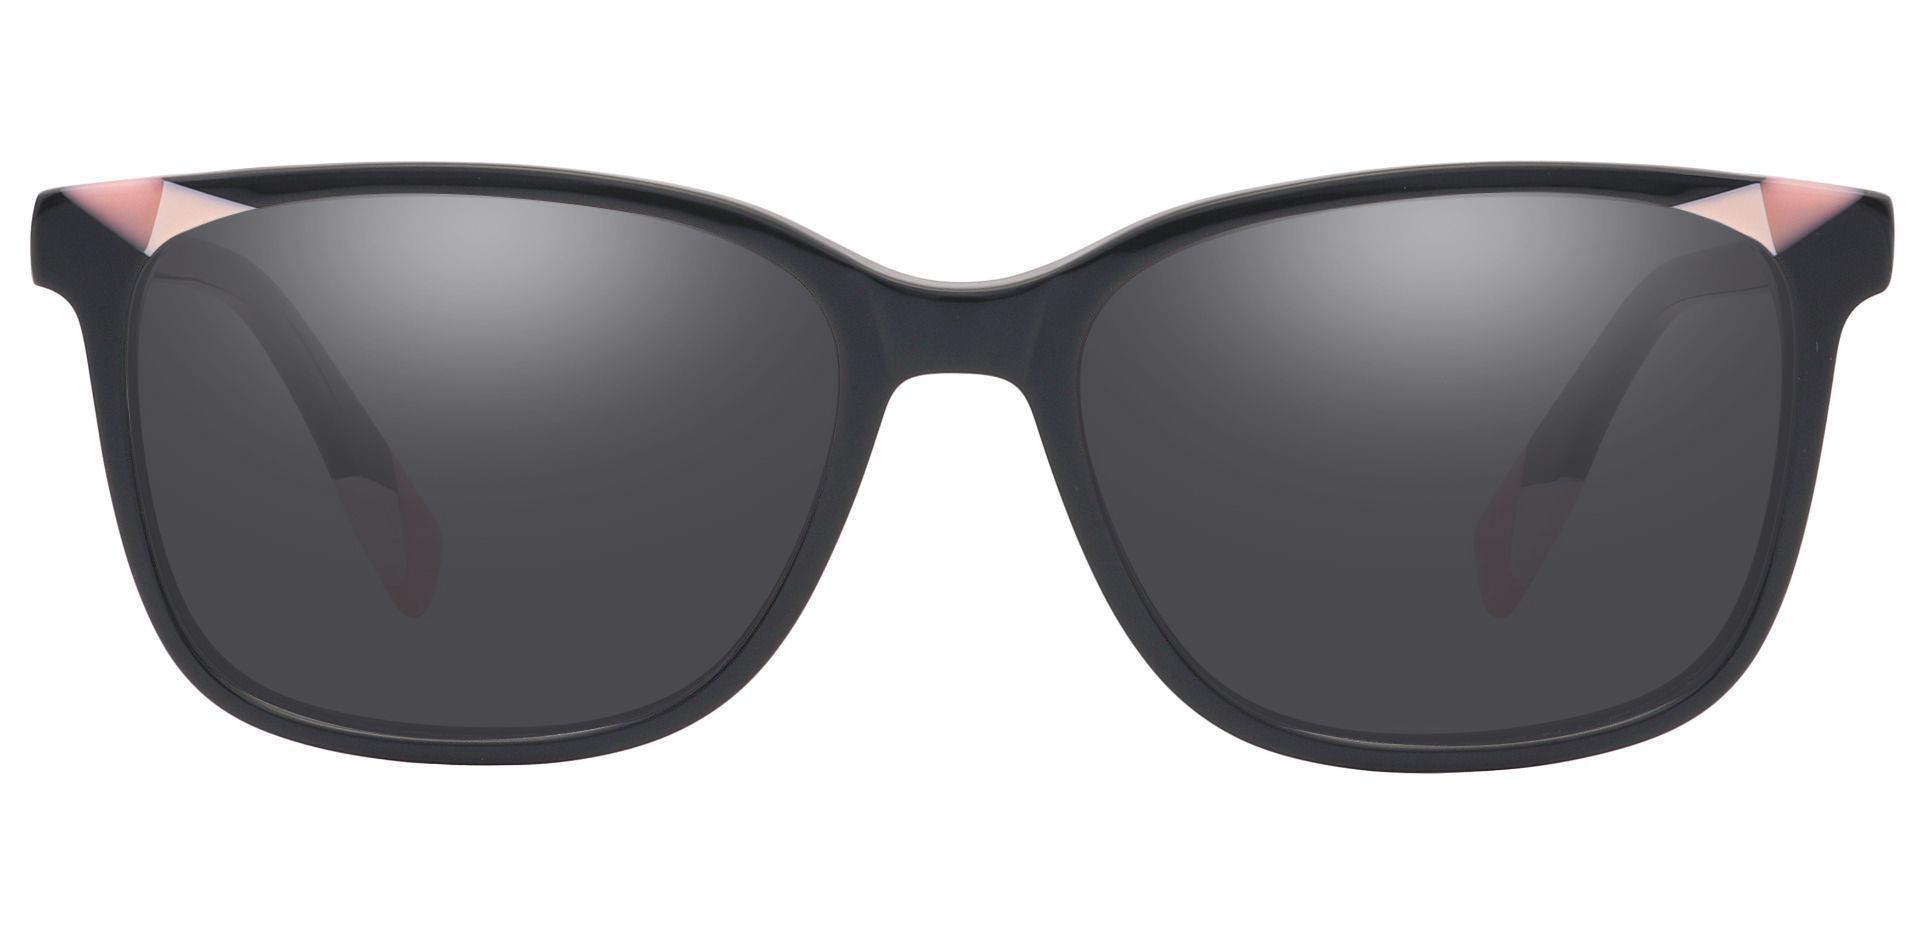 Odessa Square Prescription Sunglasses -  Pink Frame With Gray Lenses